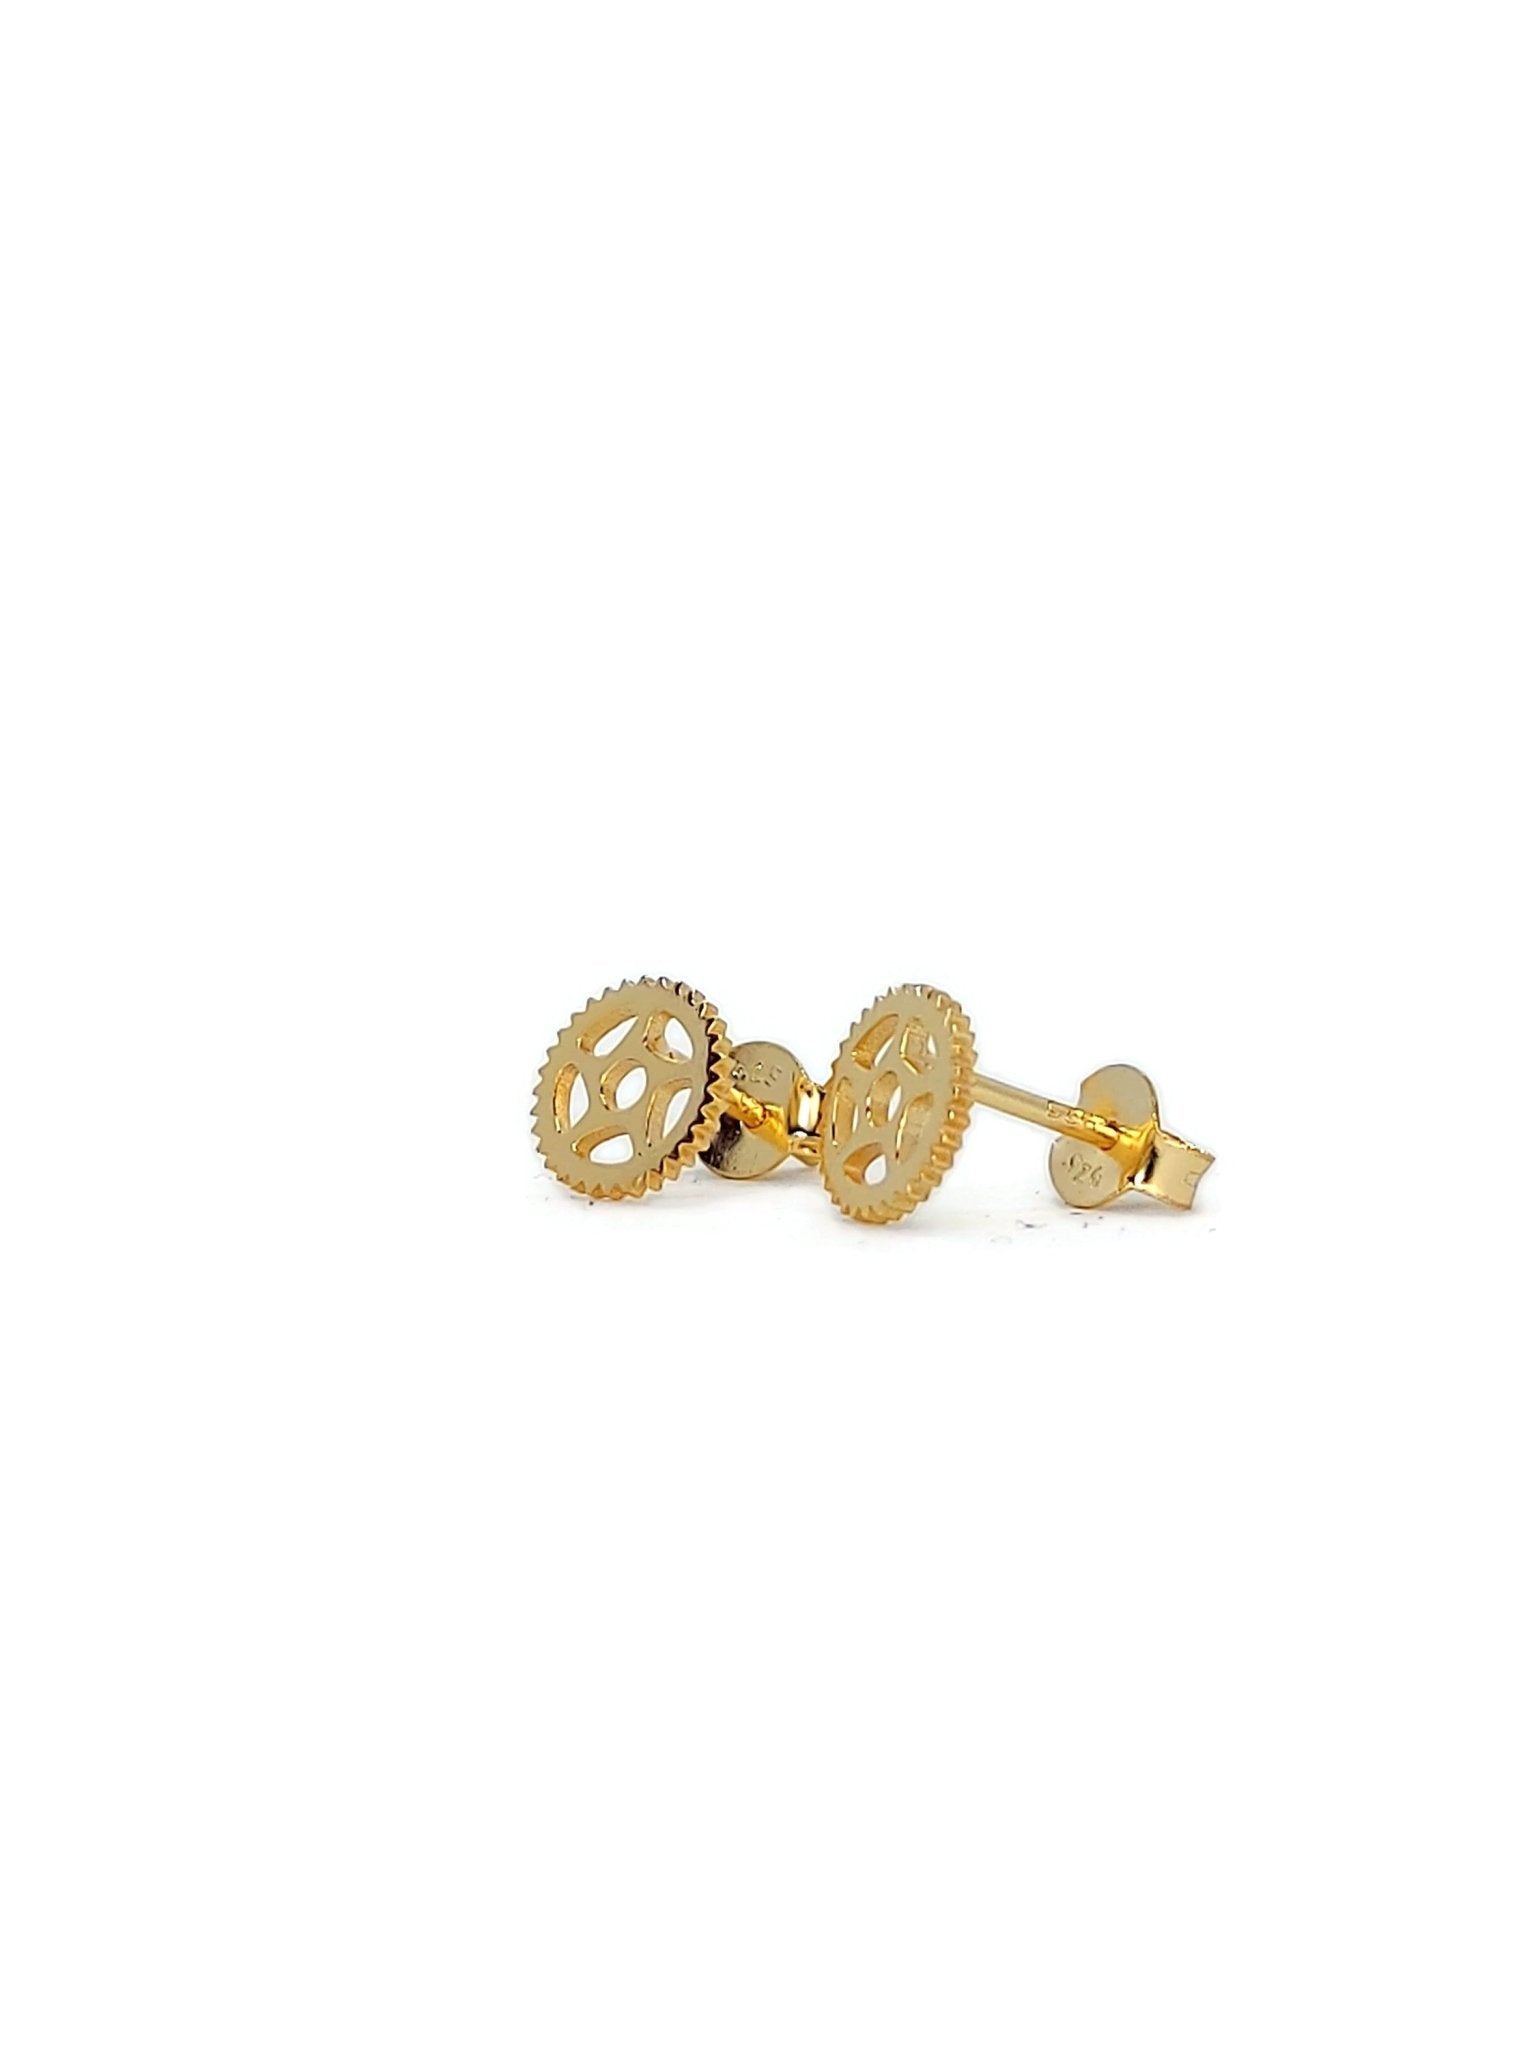 small bike gear post earrings in gold on white background